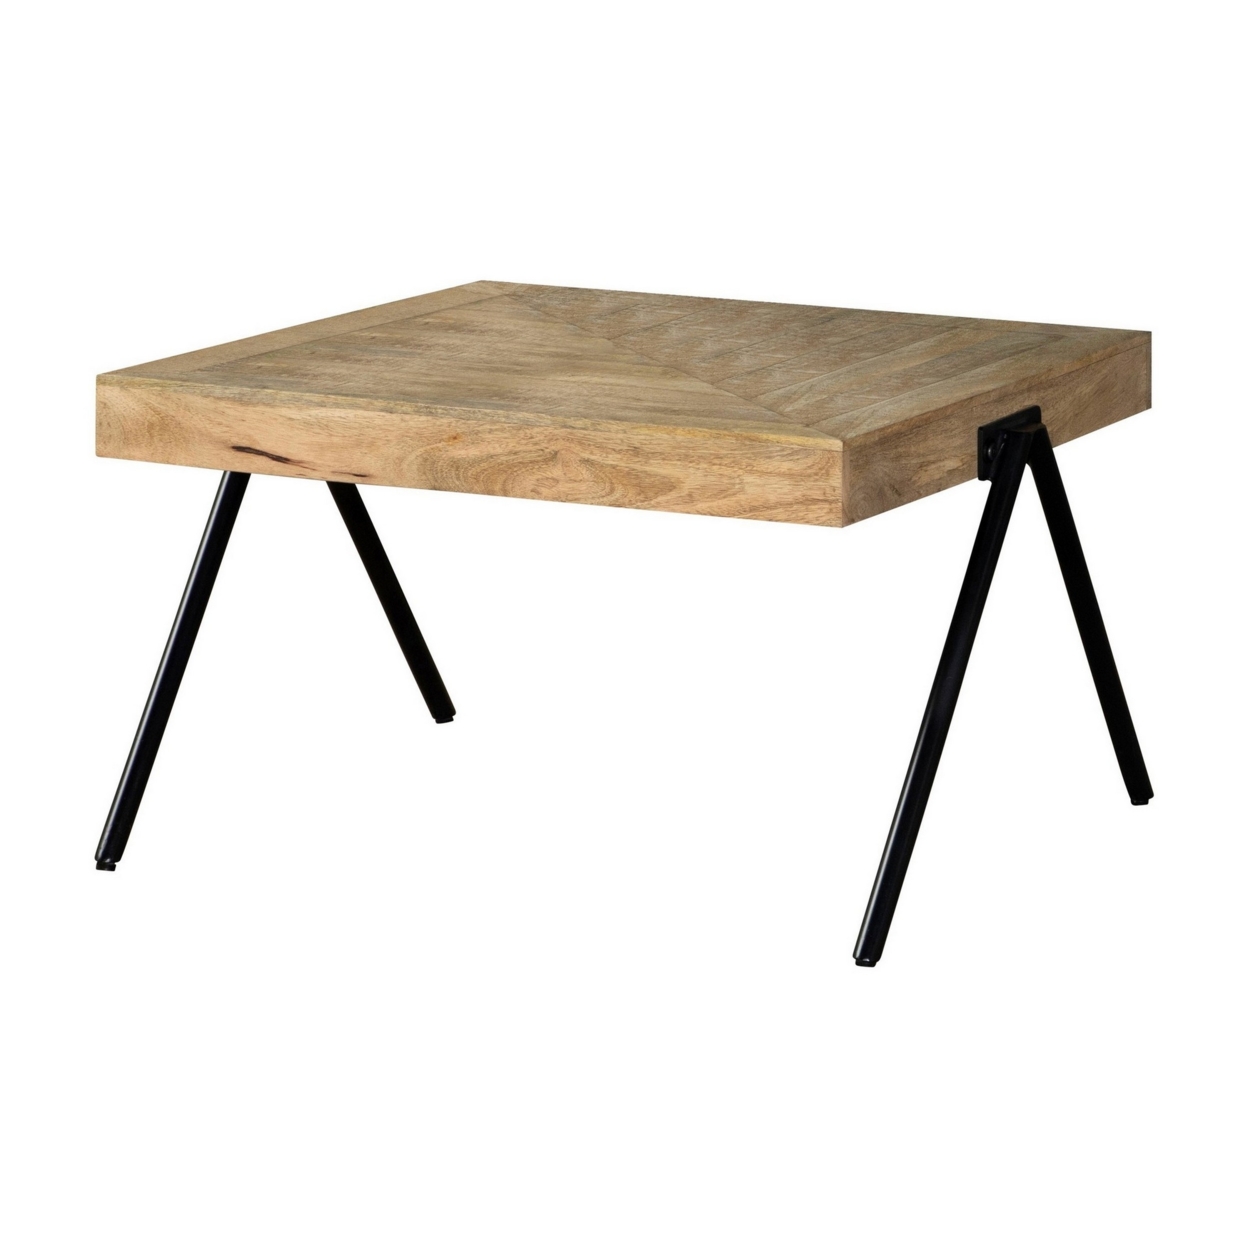 Zuri 30 Inch Coffee Table, Rectangular Mango Wood Top, Angled Iron Legs